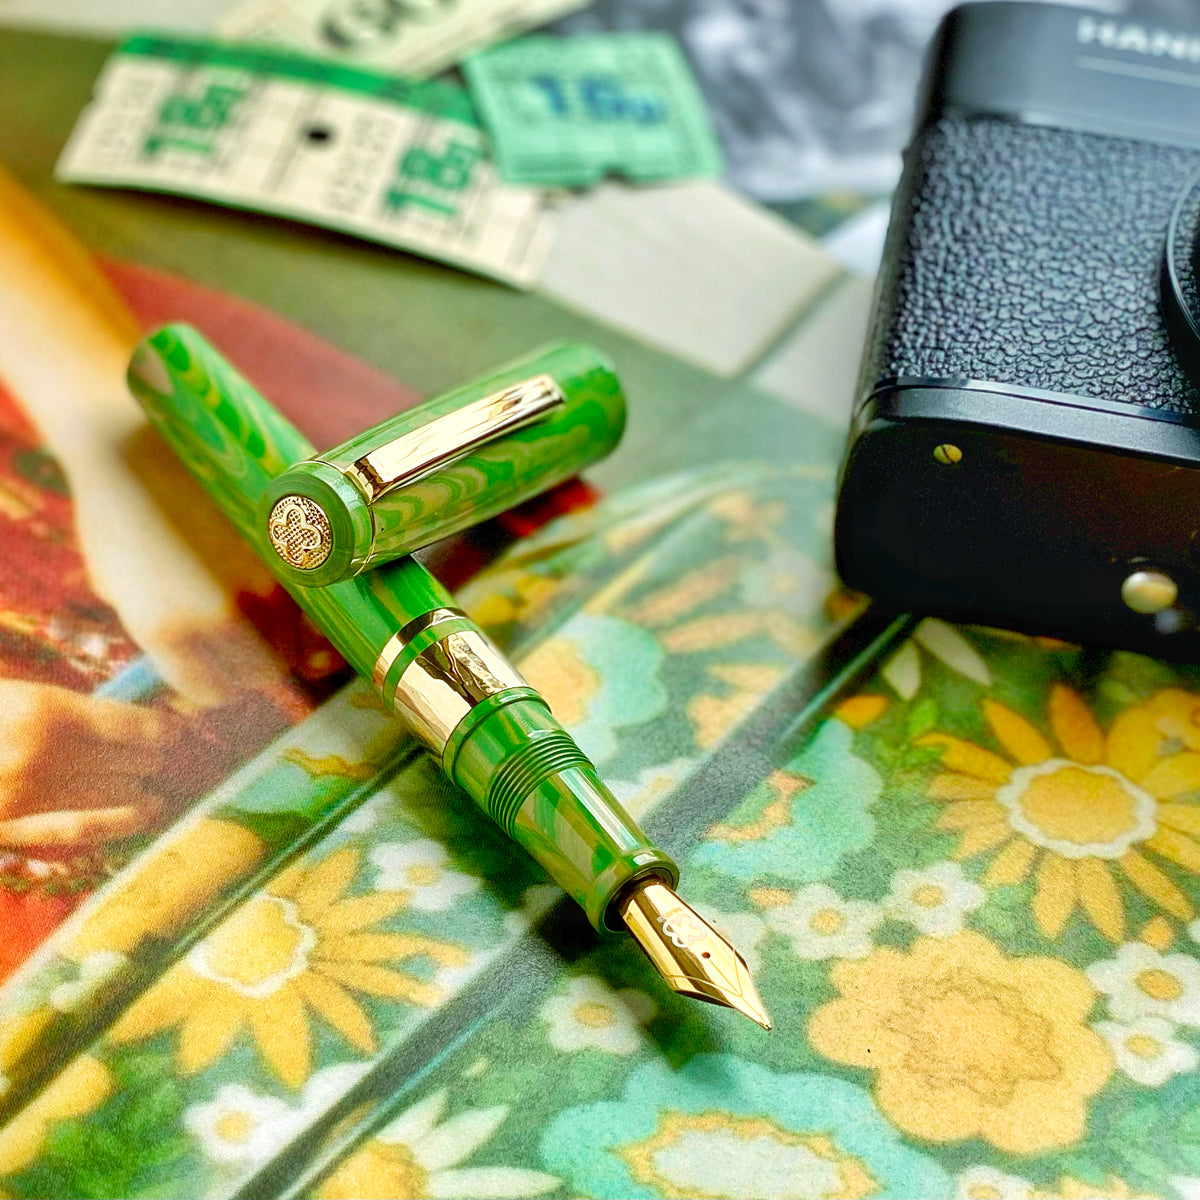 JR Pocket Pen - Model J Lotus Green Ebonite with Gold trim - Custom Gena Nib